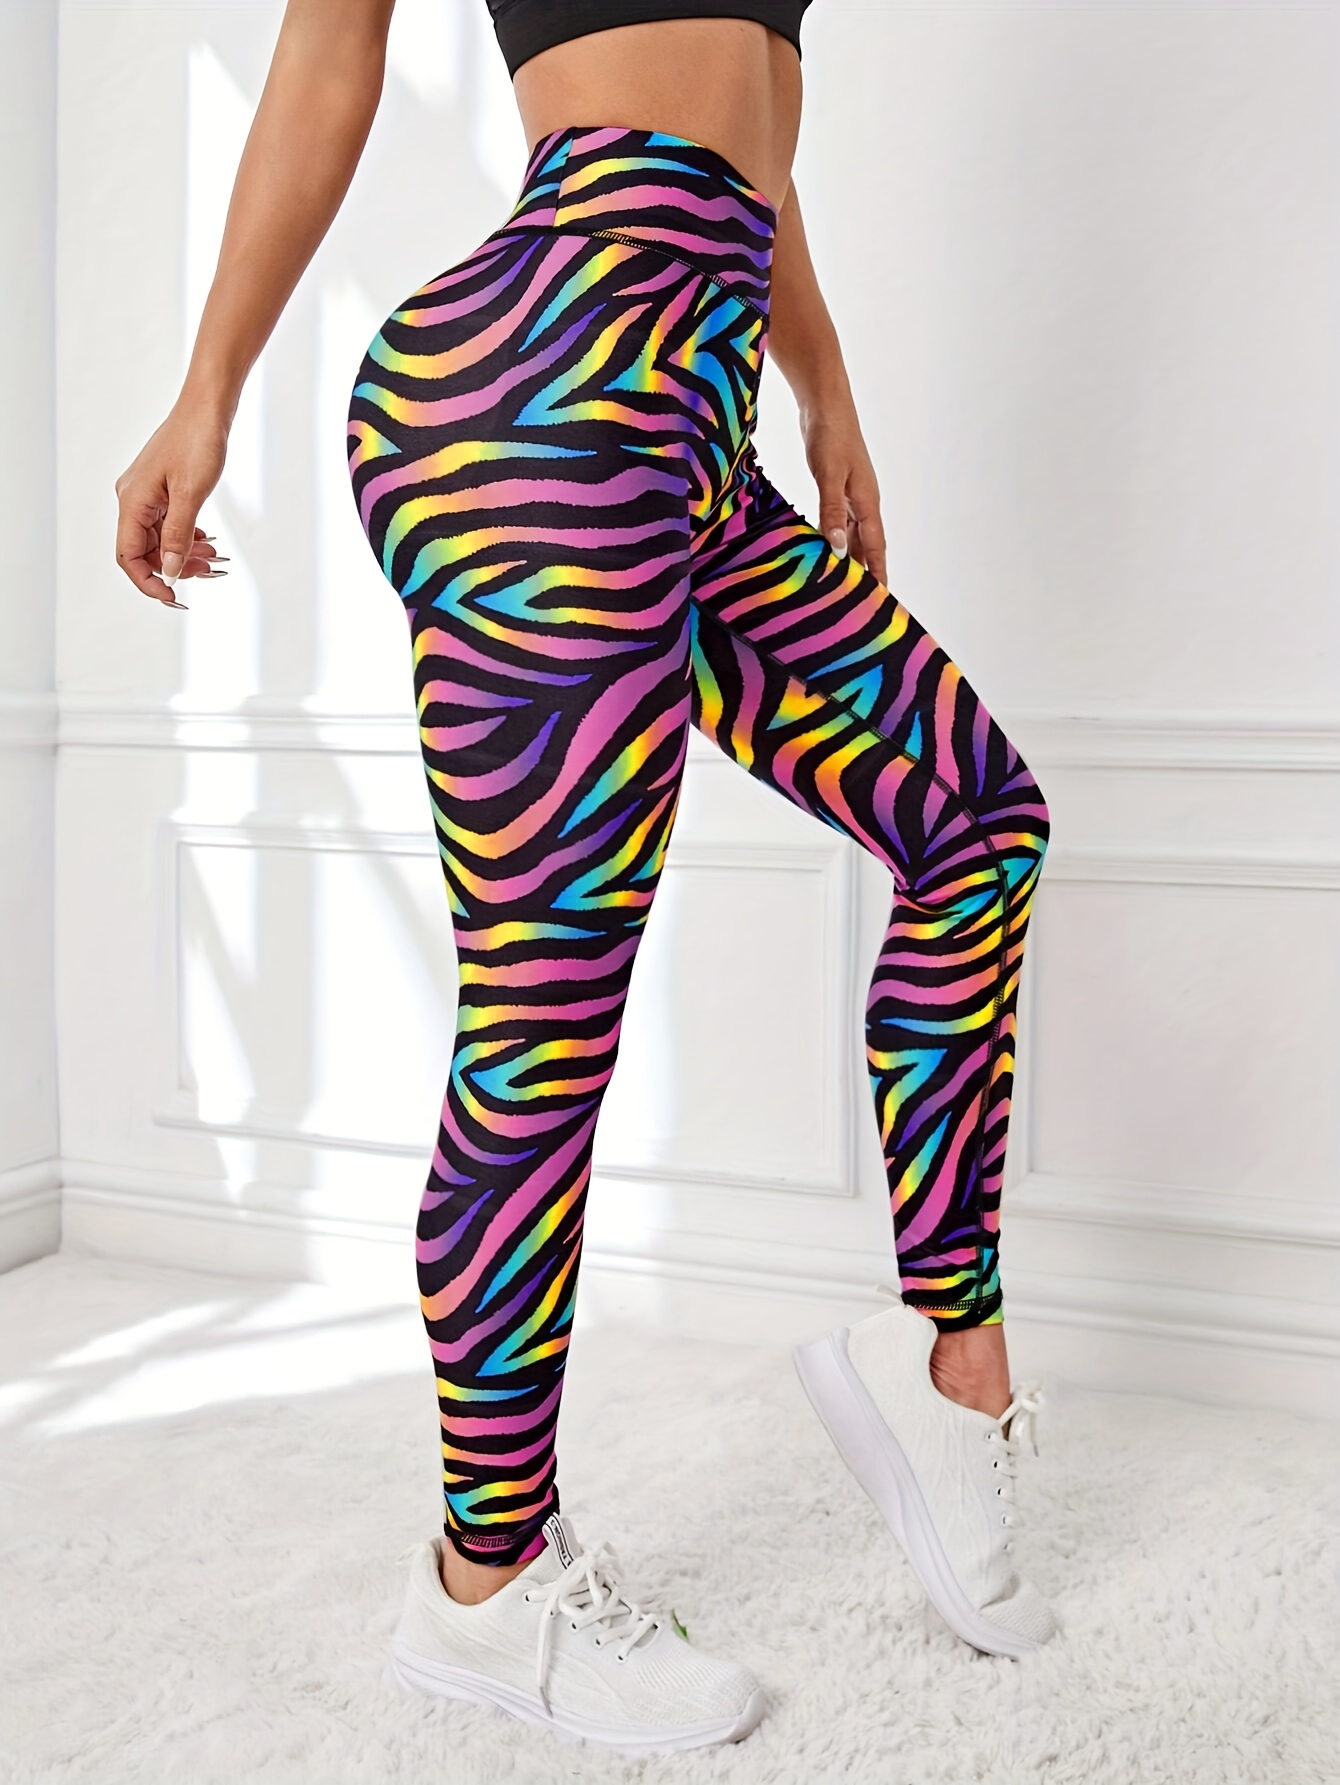 Kleurrijke yoga legging met zebrapatroon ademende yoga broek